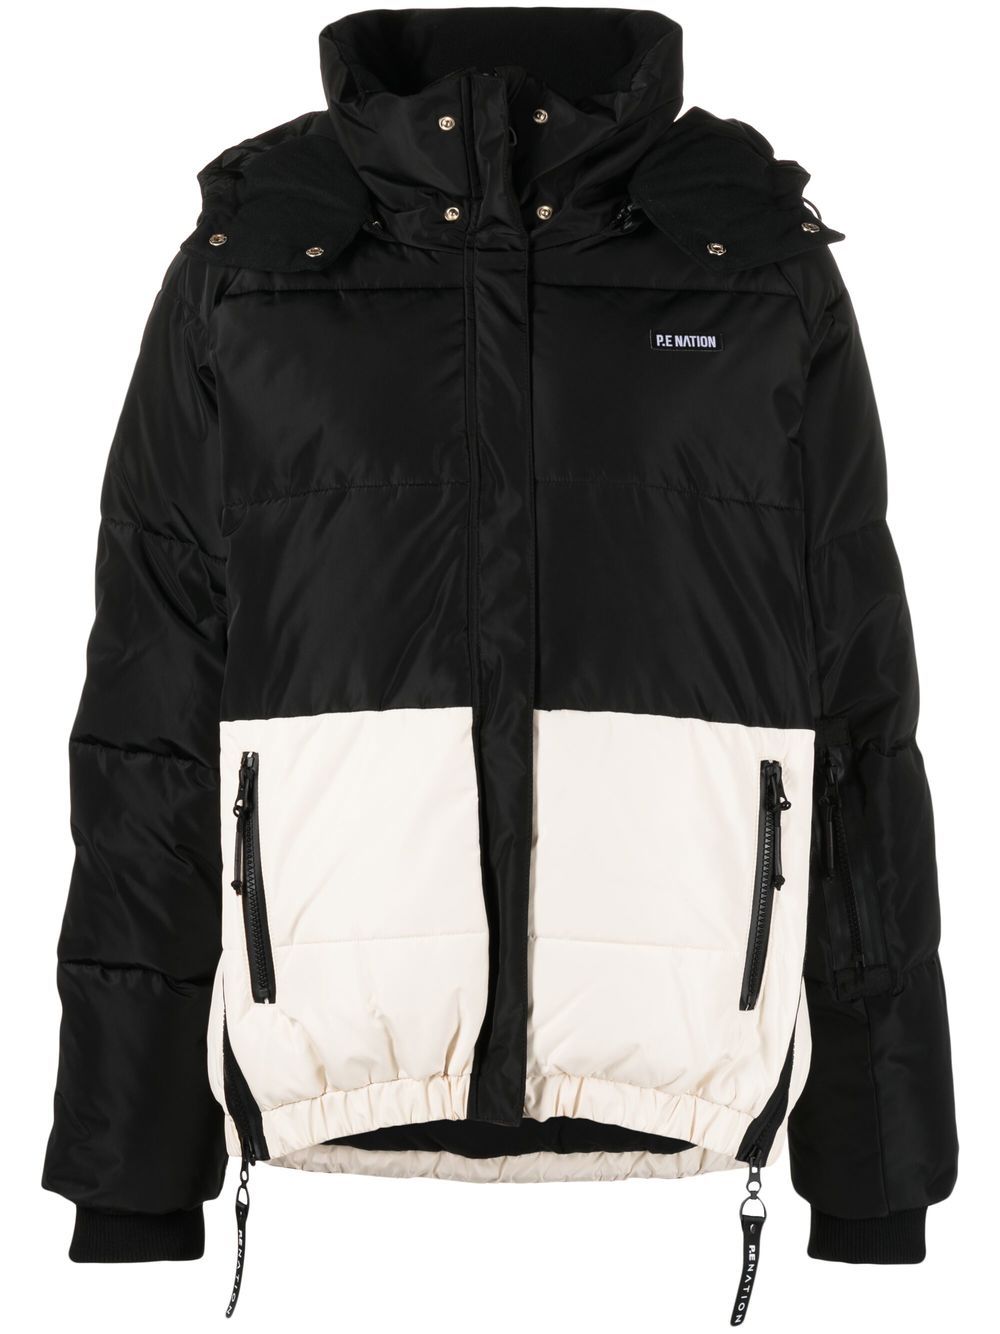 P.E Nation Rocket Air Snow ski jacket - Black